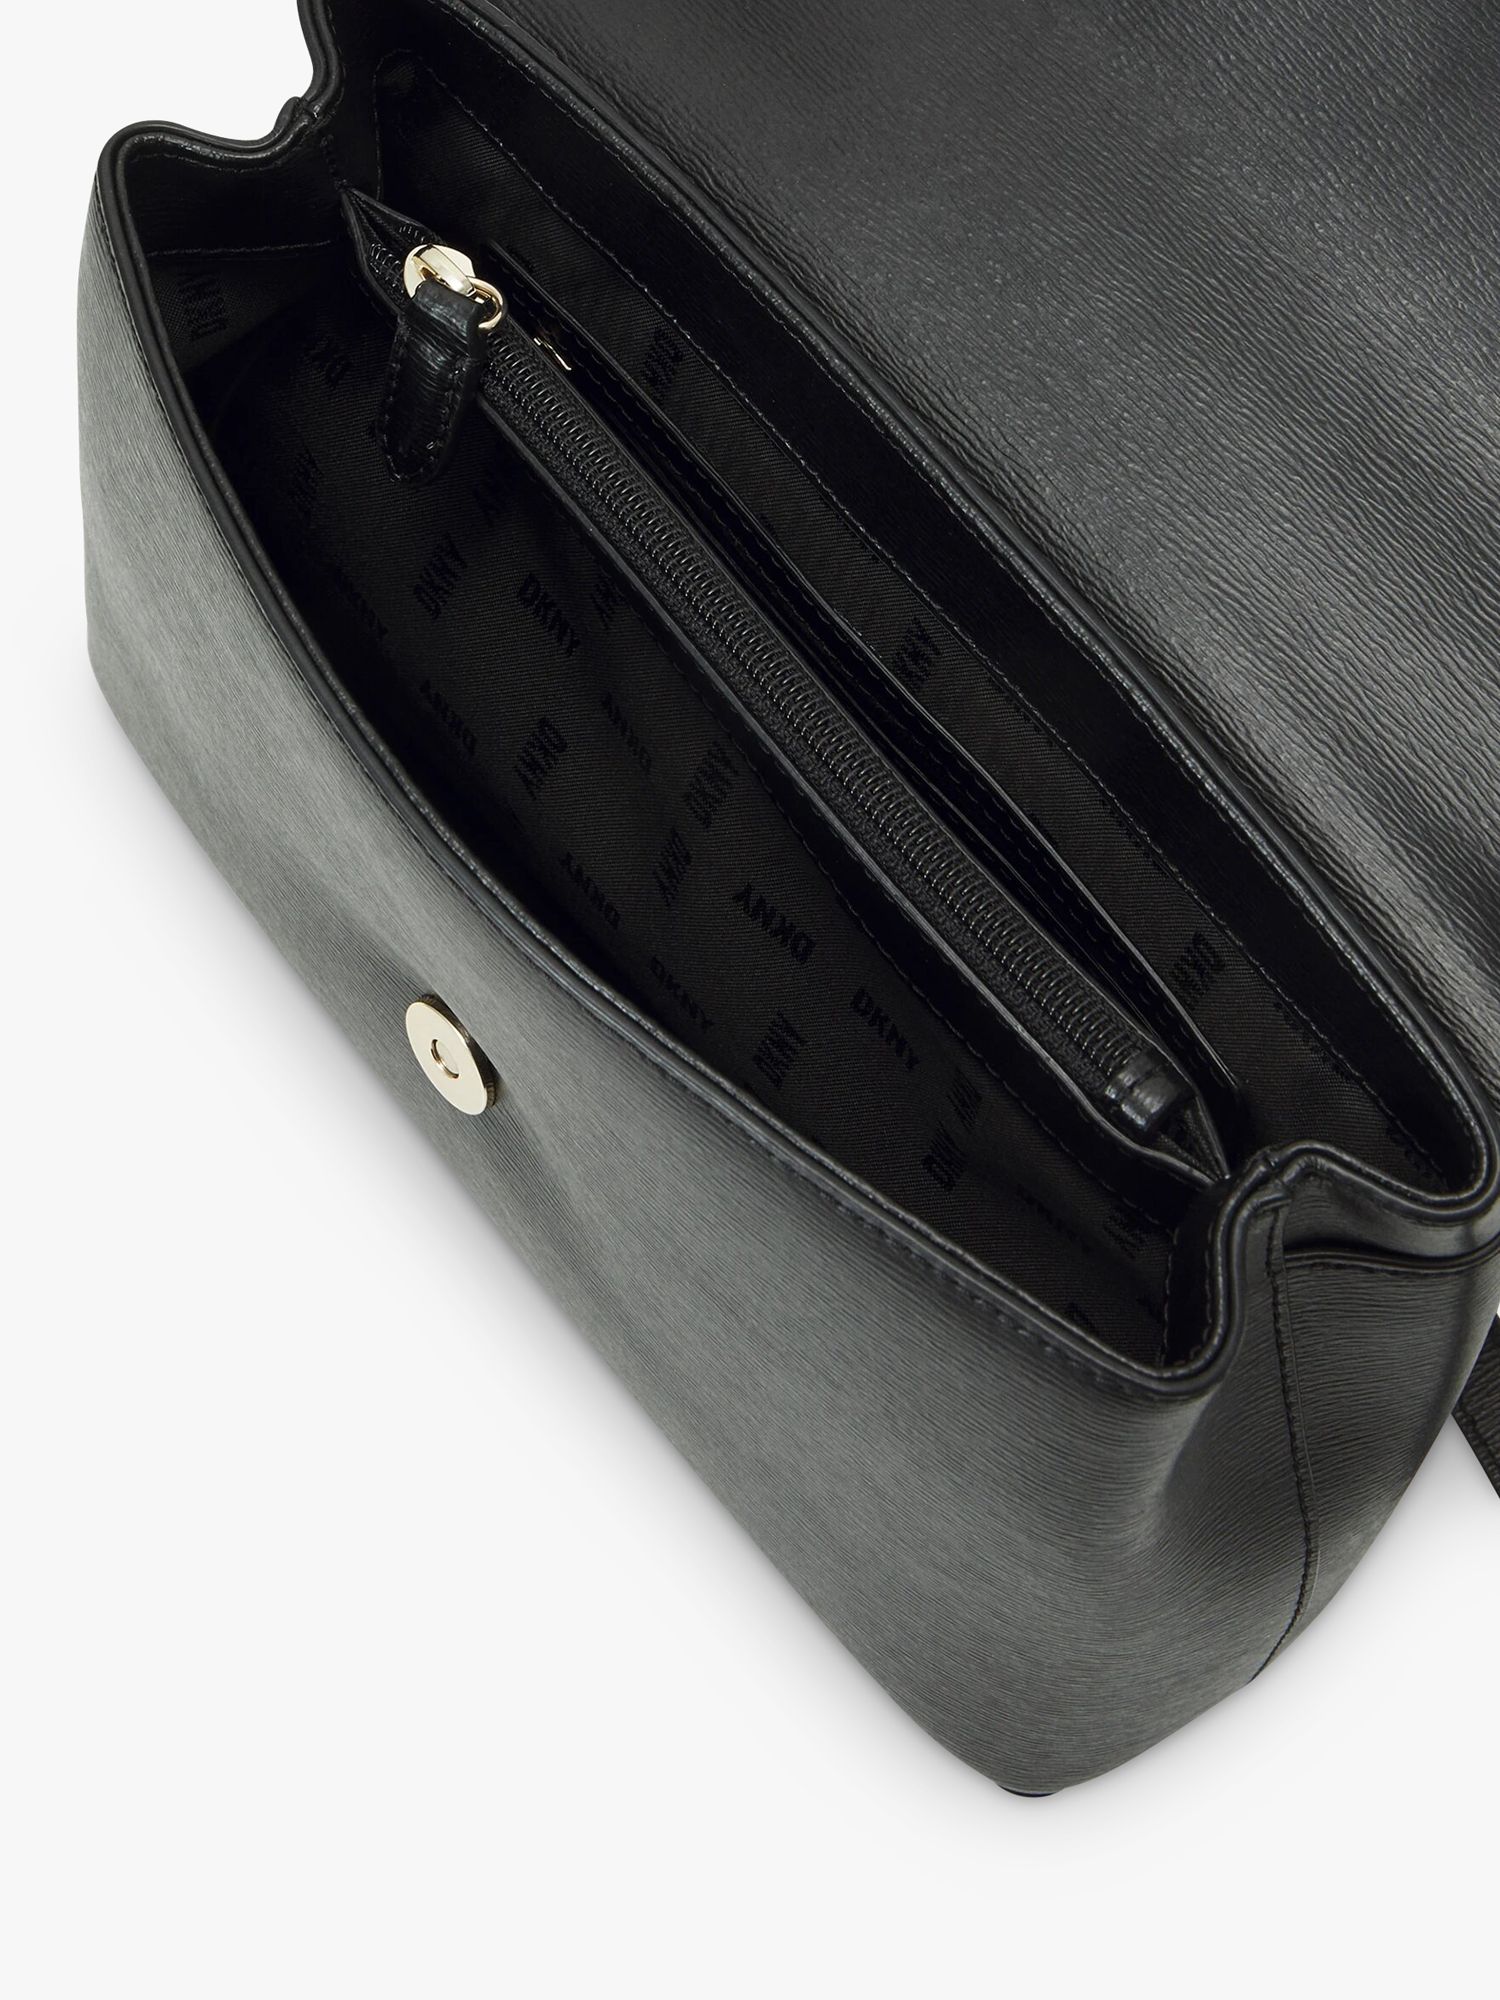 DKNY Silver Leather Kenogami Cross body Bag